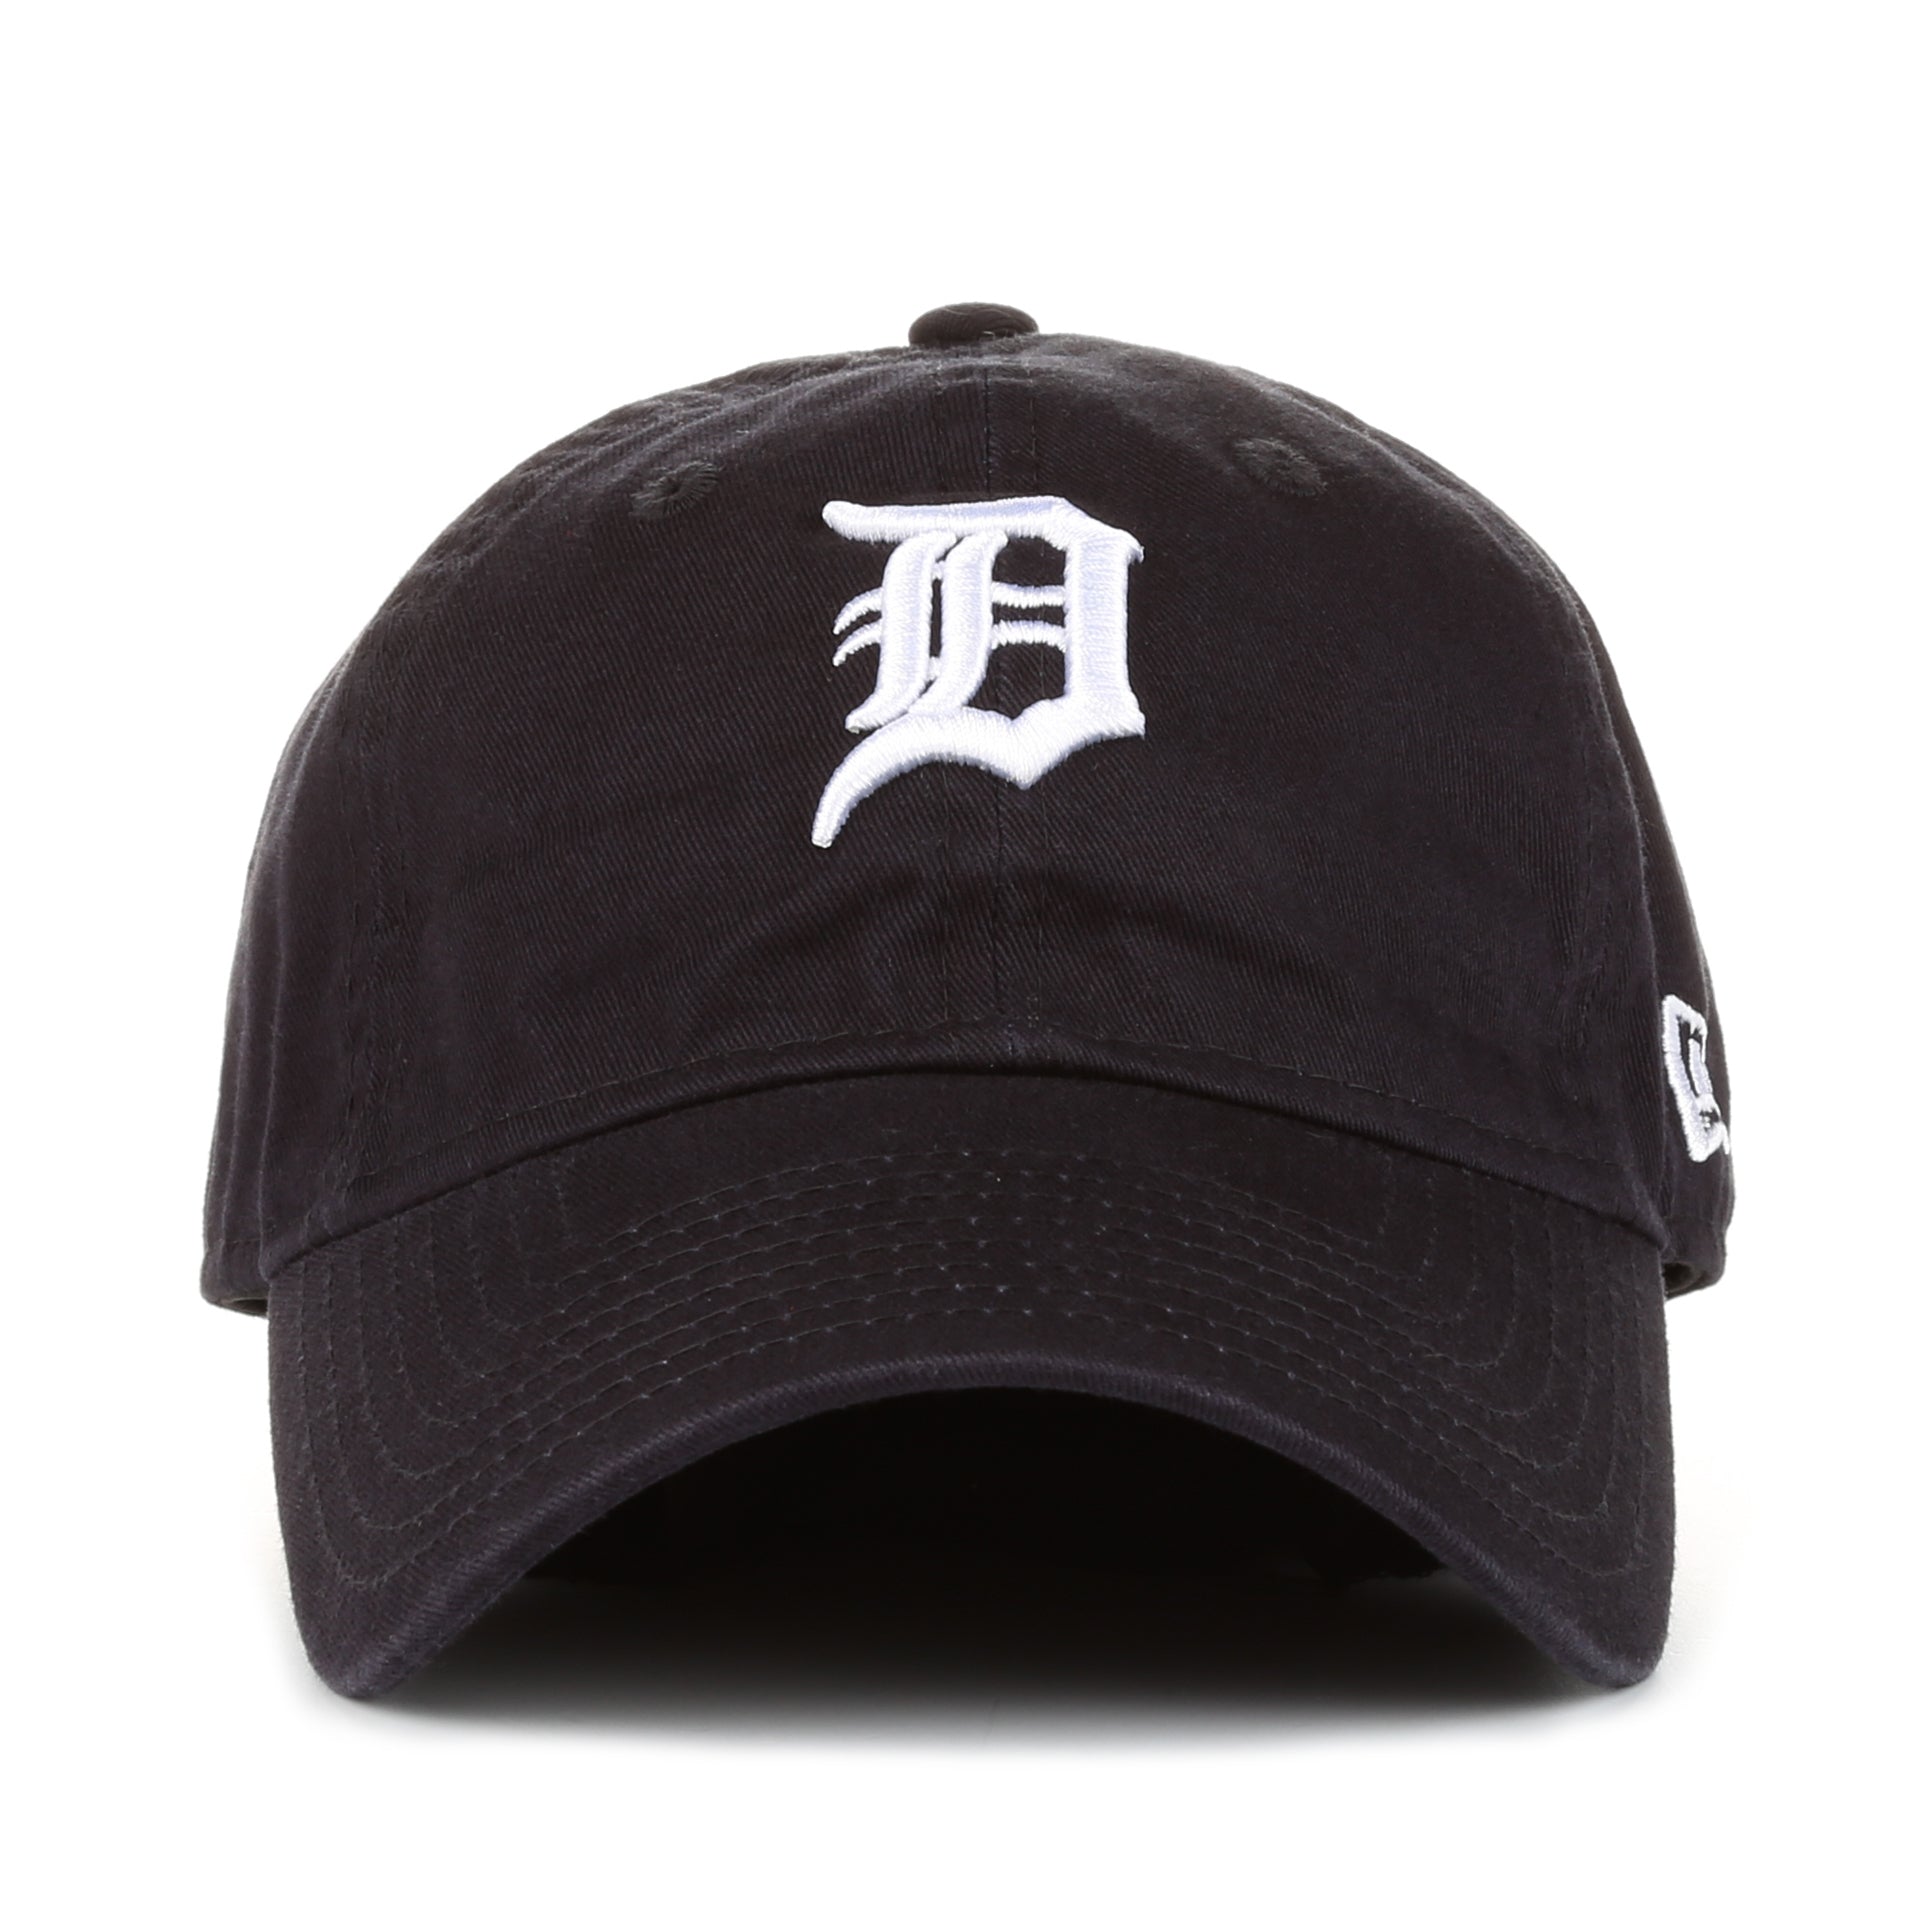 New Era 9Fifty Detroit Tigers Basic Snapback - Blackout - New Star